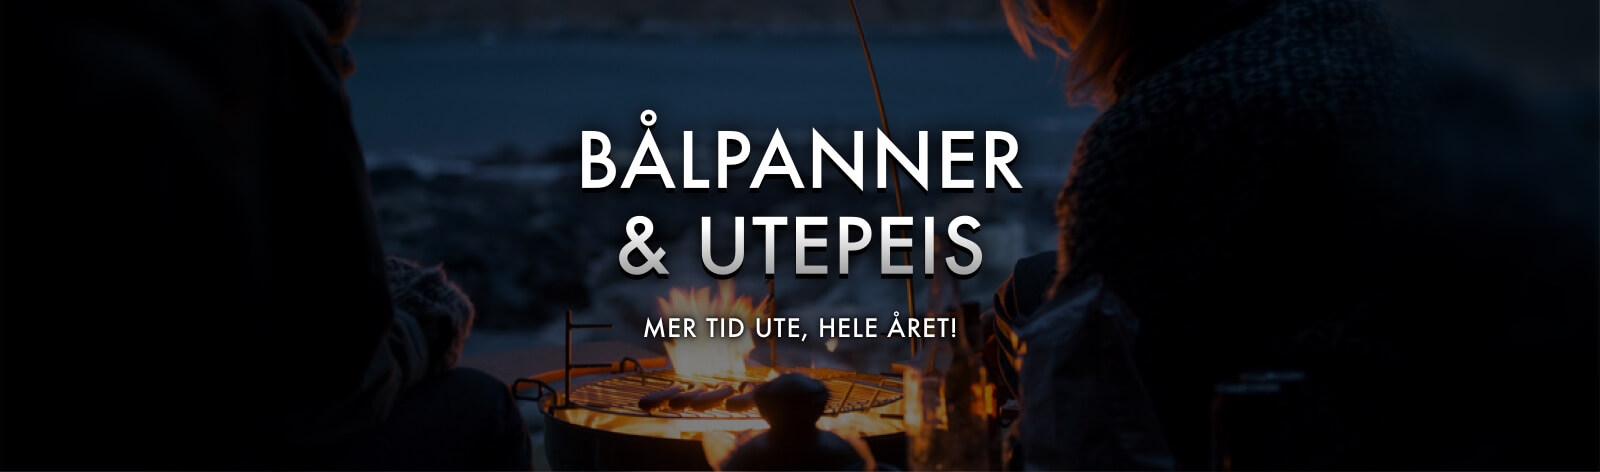 BÅLPANNE & UTEPEIS